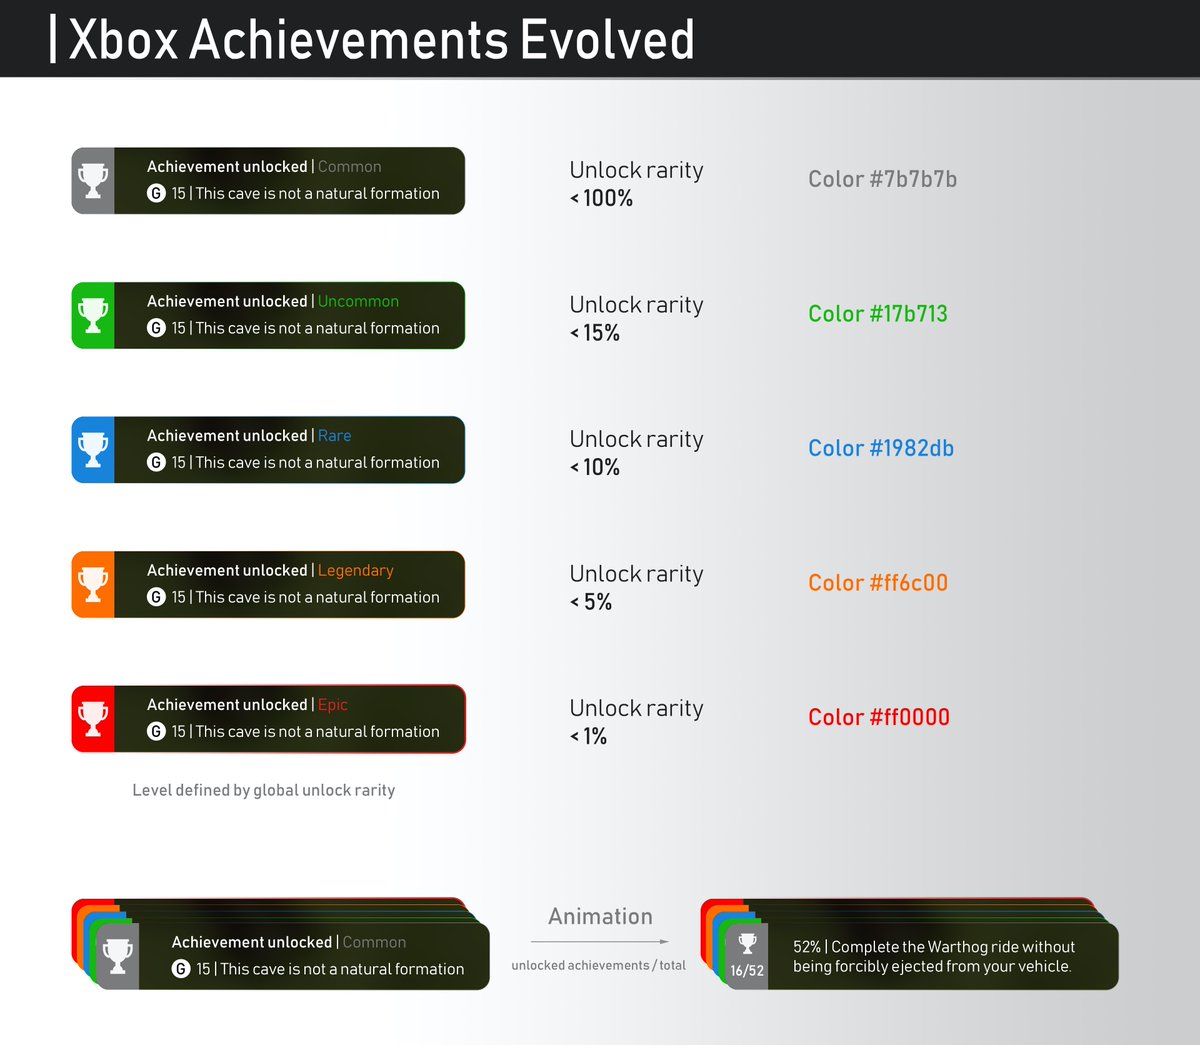 Klobrille опубликовал концепт системы достижений Xbox